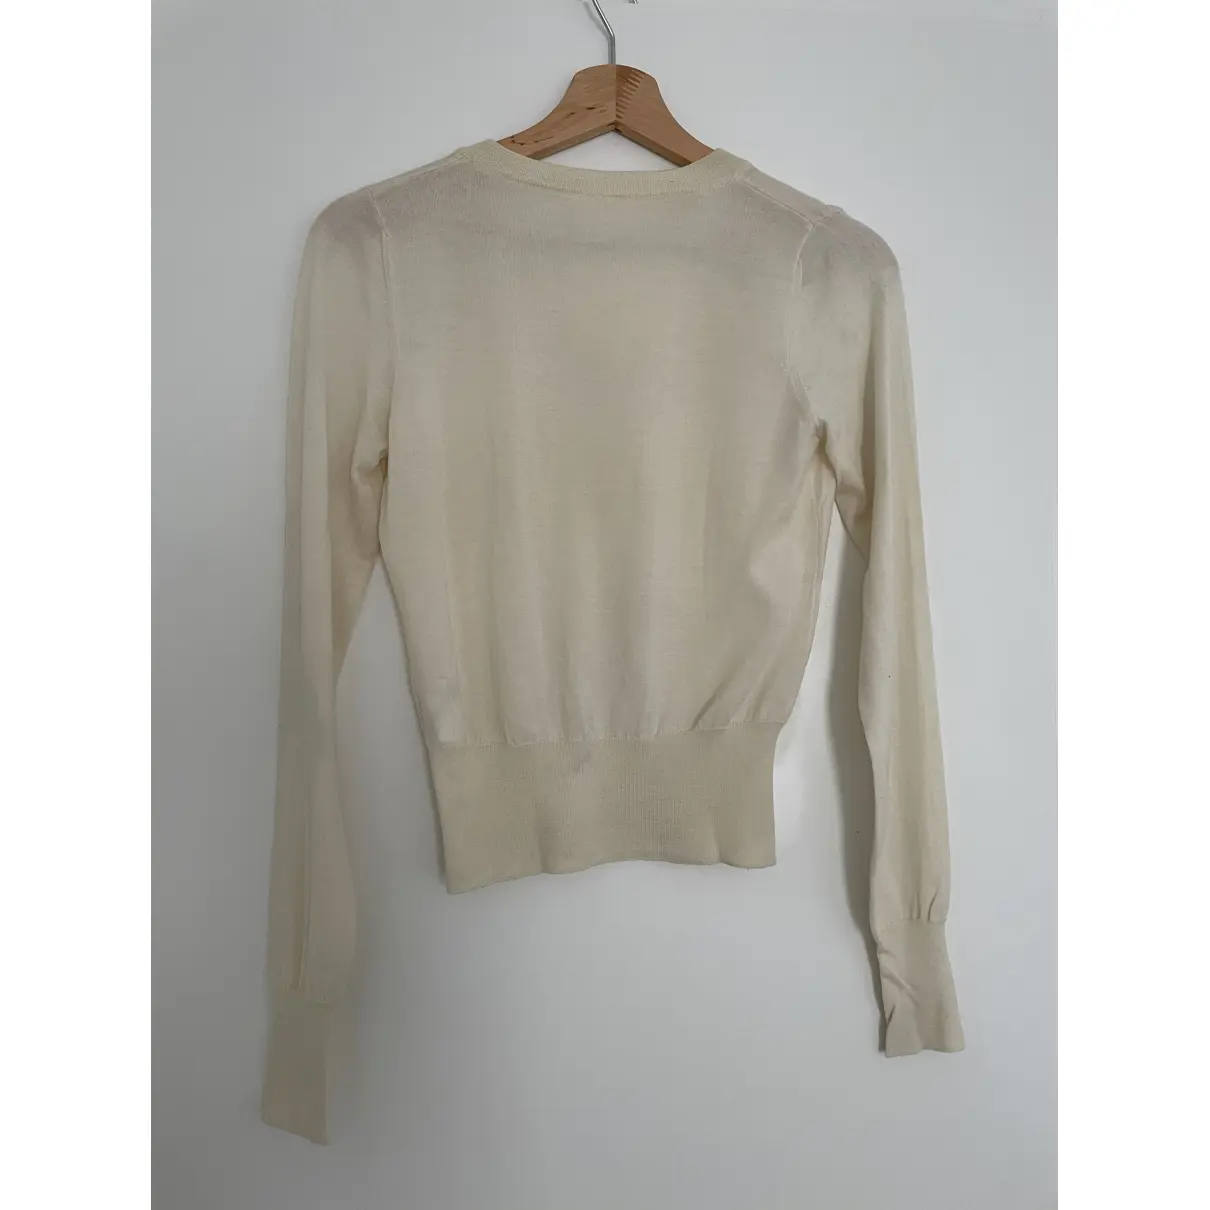 Buy Alaïa Wool jumper online - Vintage